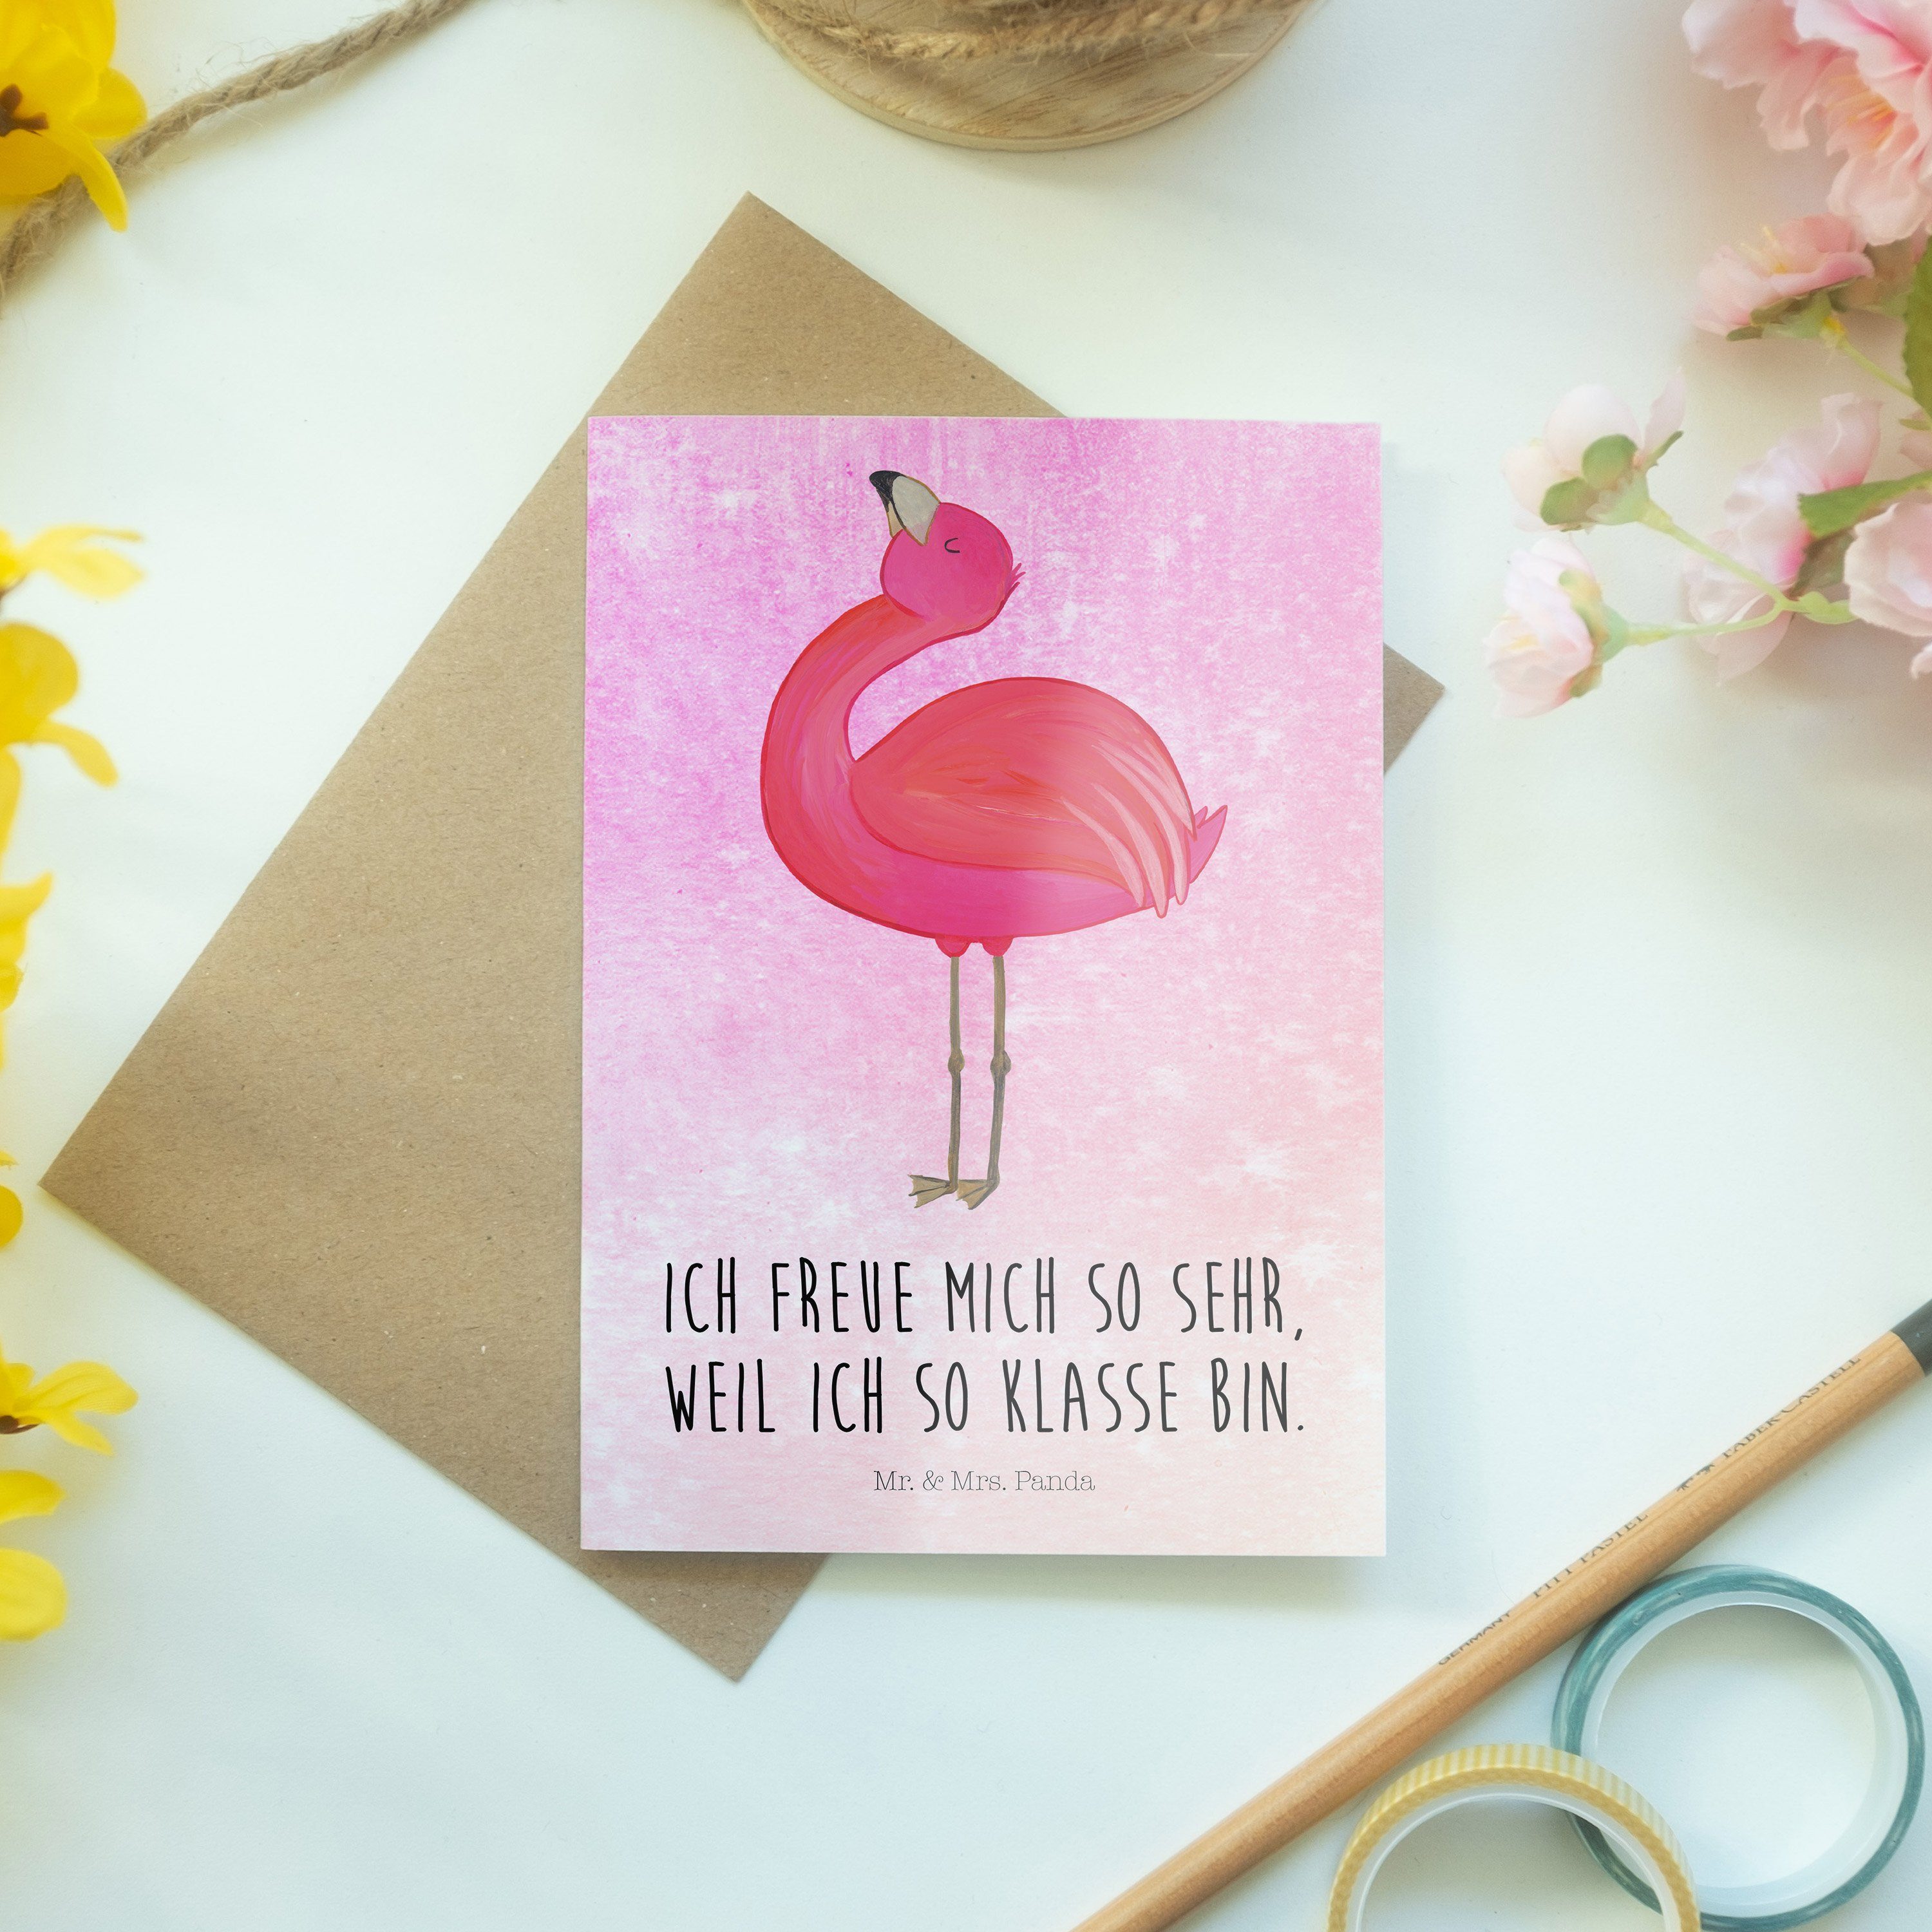 Glückwun Aquarell Mr. Geschenk, Grußkarte Mrs. Flamingo Geburtstagskarte, Panda & Pink - - stolz